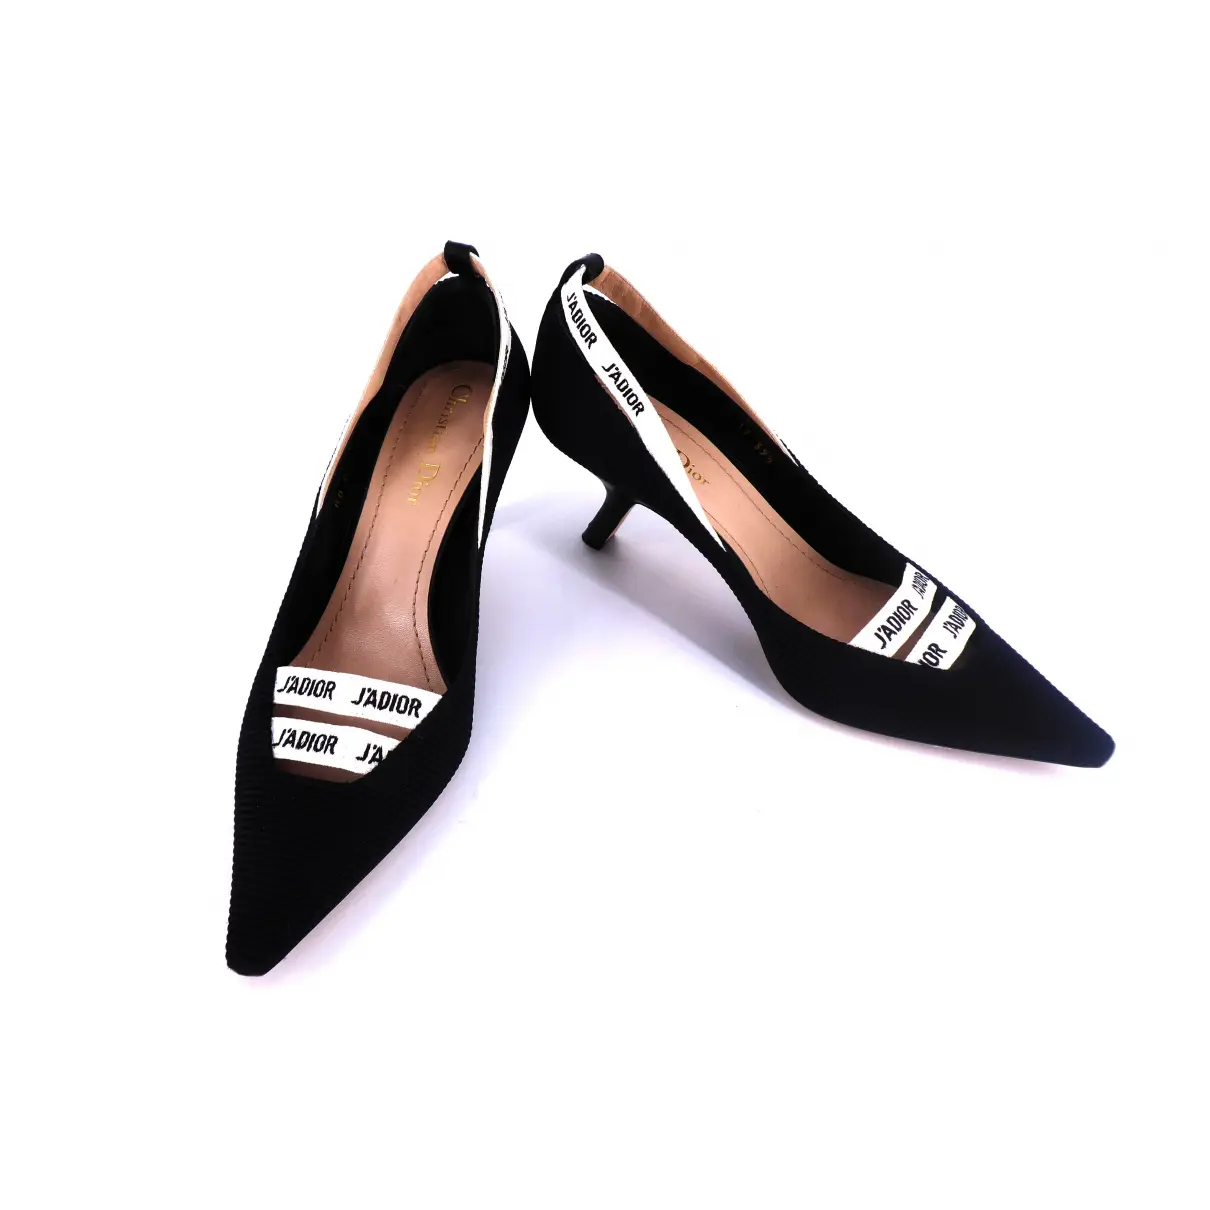 Buy Dior Cloth heels online